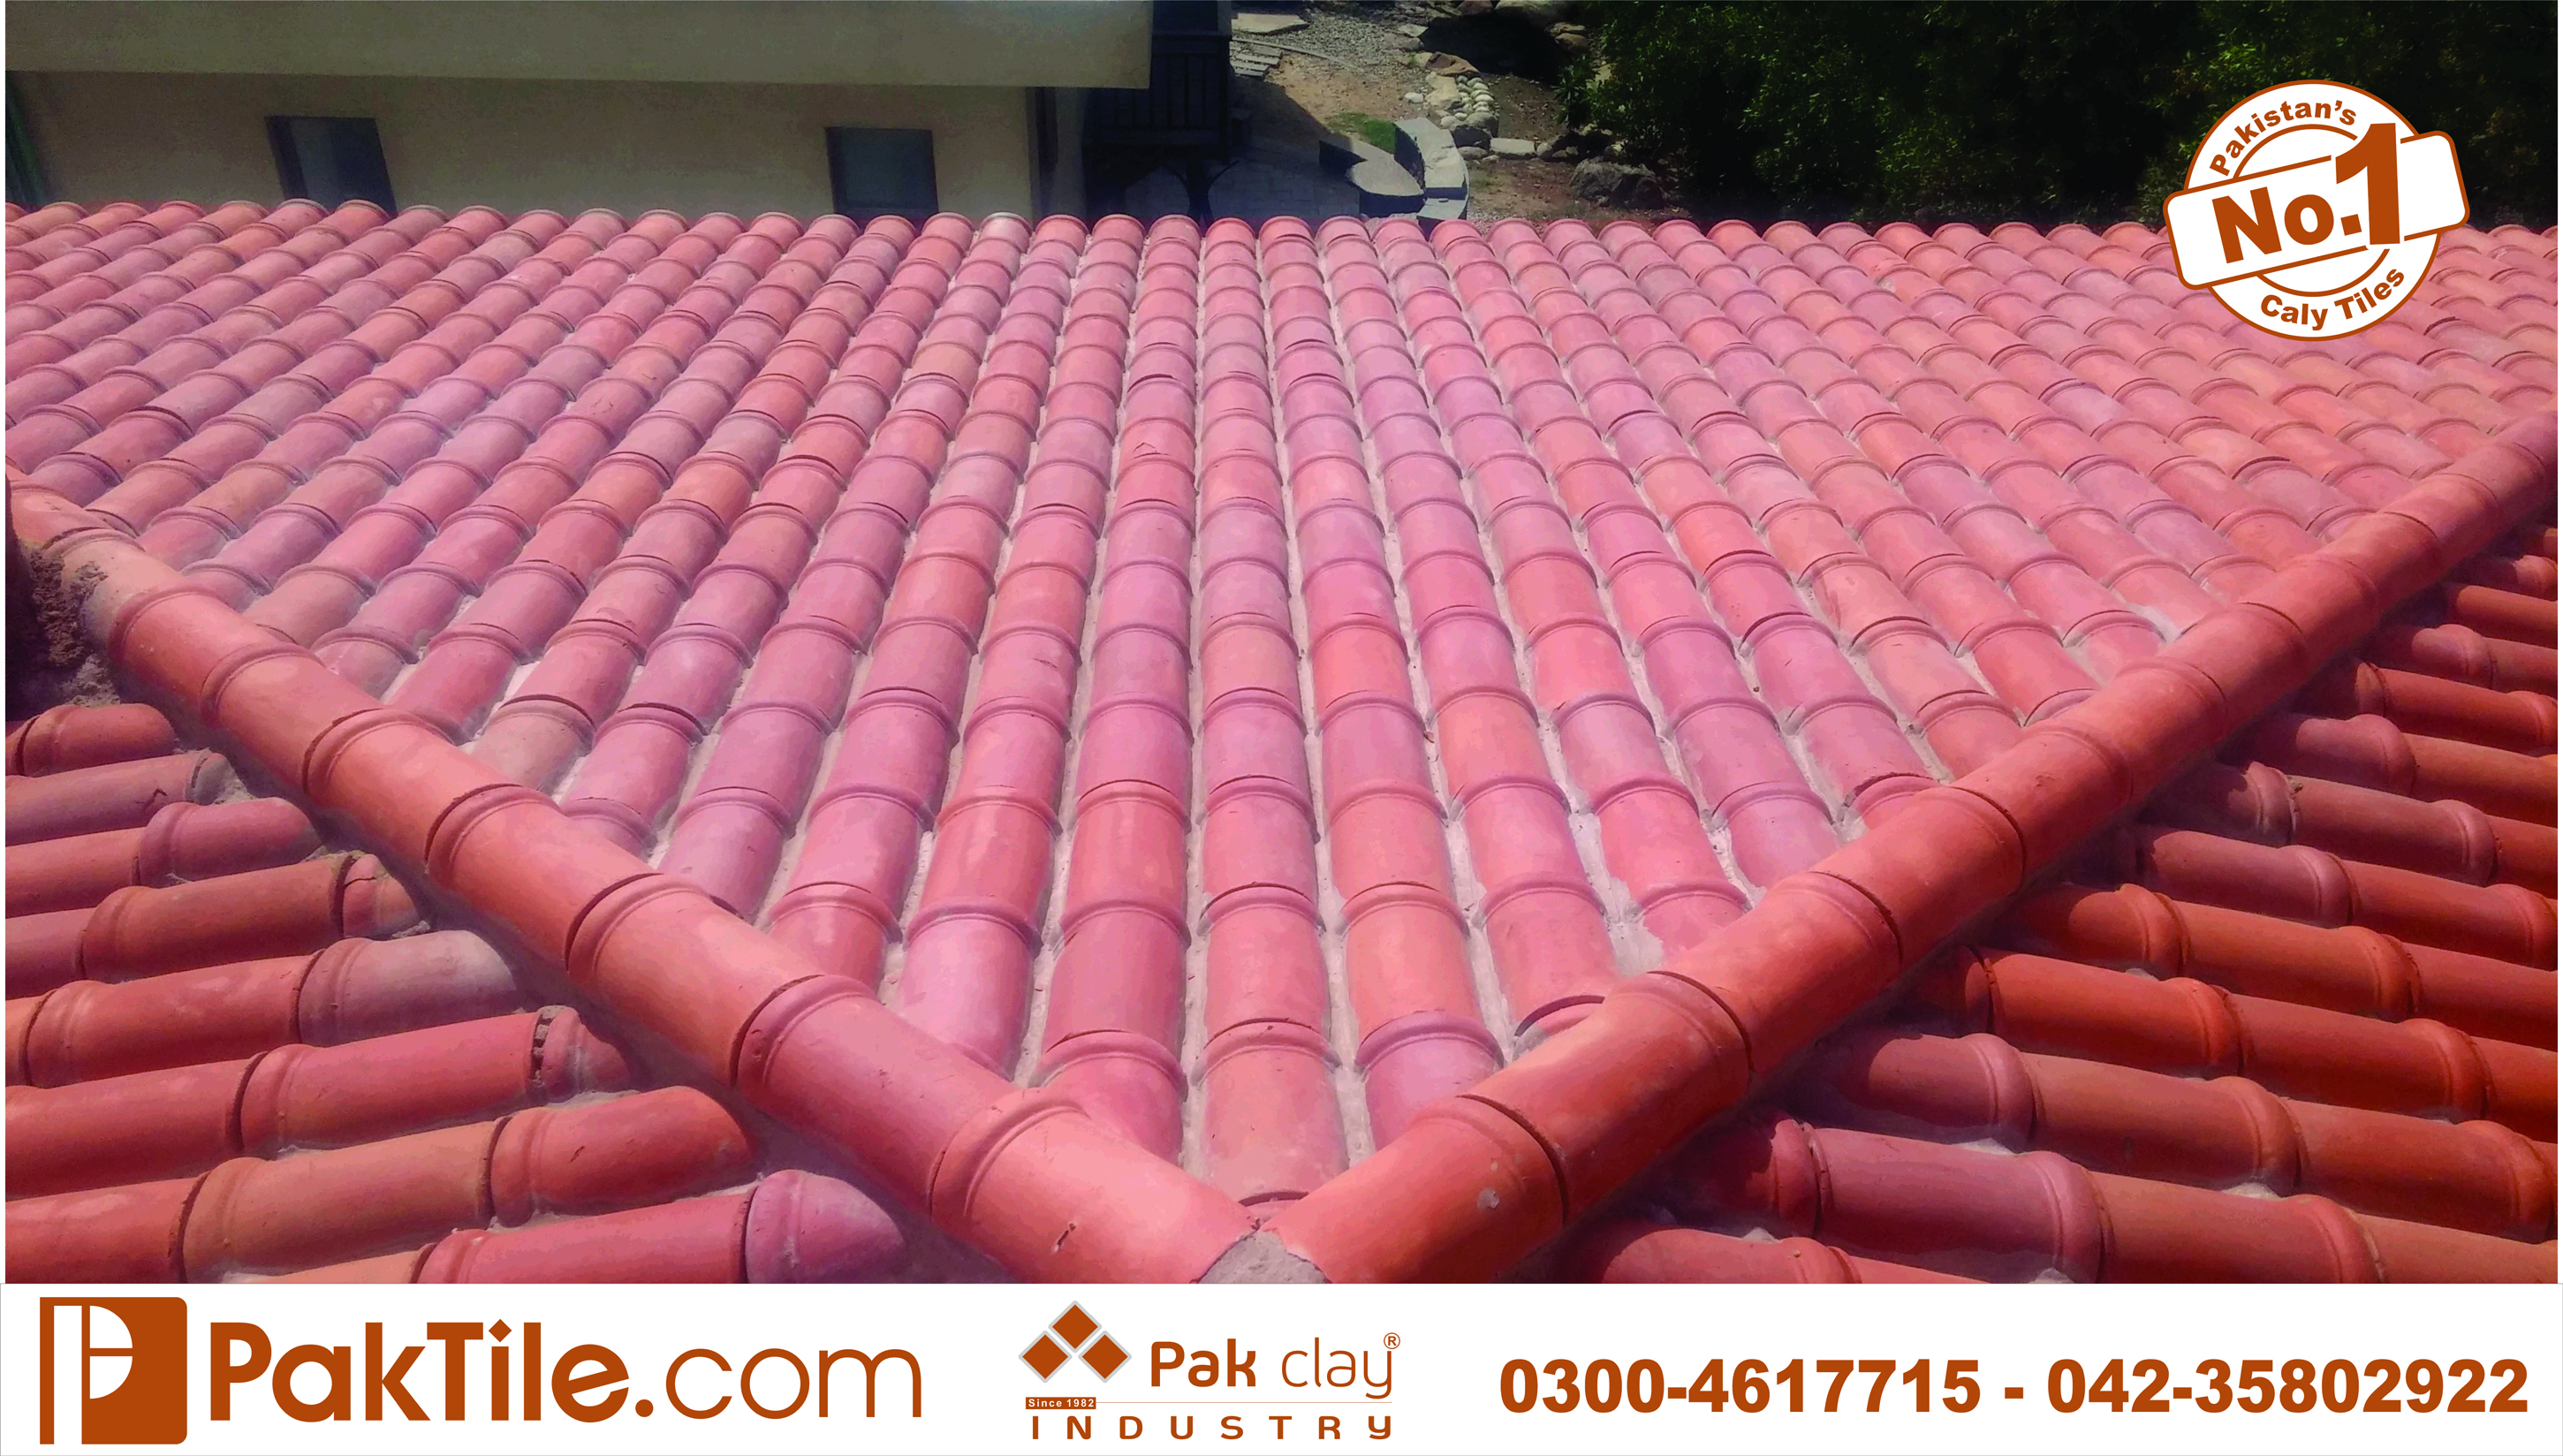 Pak Clay heat waterproof insulation glazed cool roofing shingles khaprail tiles factory stores low price multan kpk